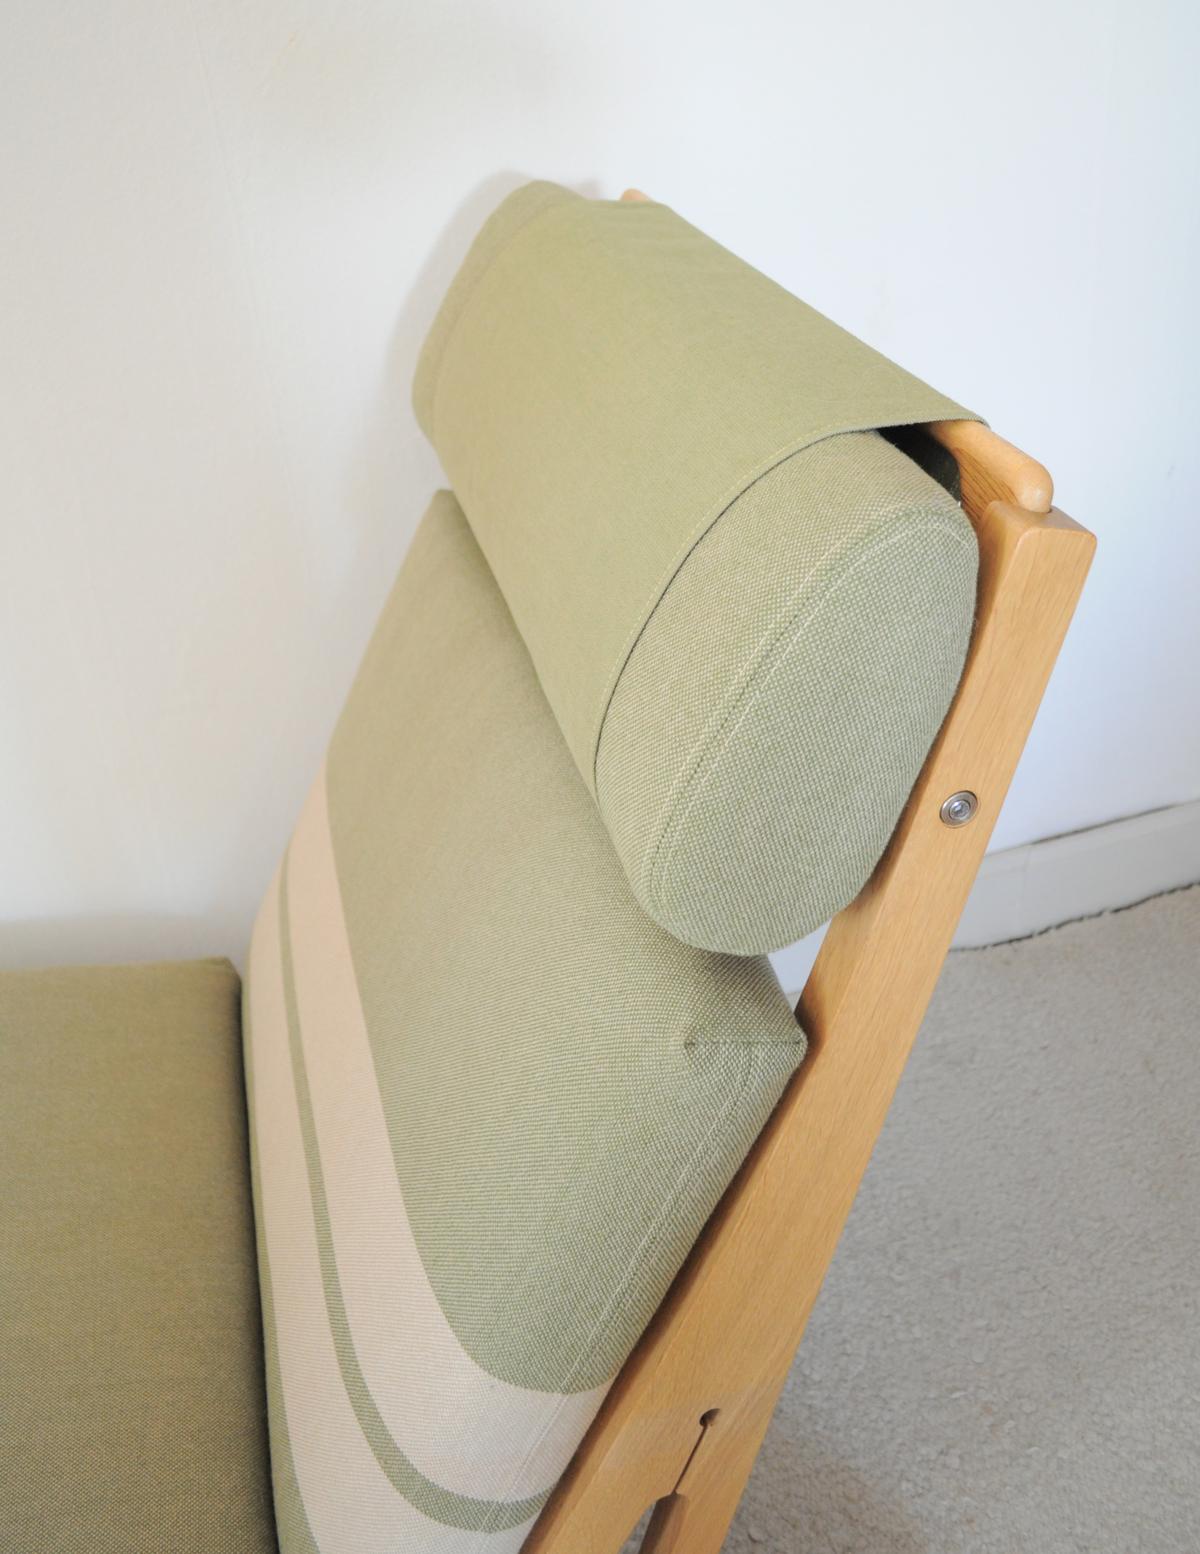 Scandinavian Modern Lounge Chair Made of Oak Designed in 1969 by Hans J. Wegner, Produced by GETAMA